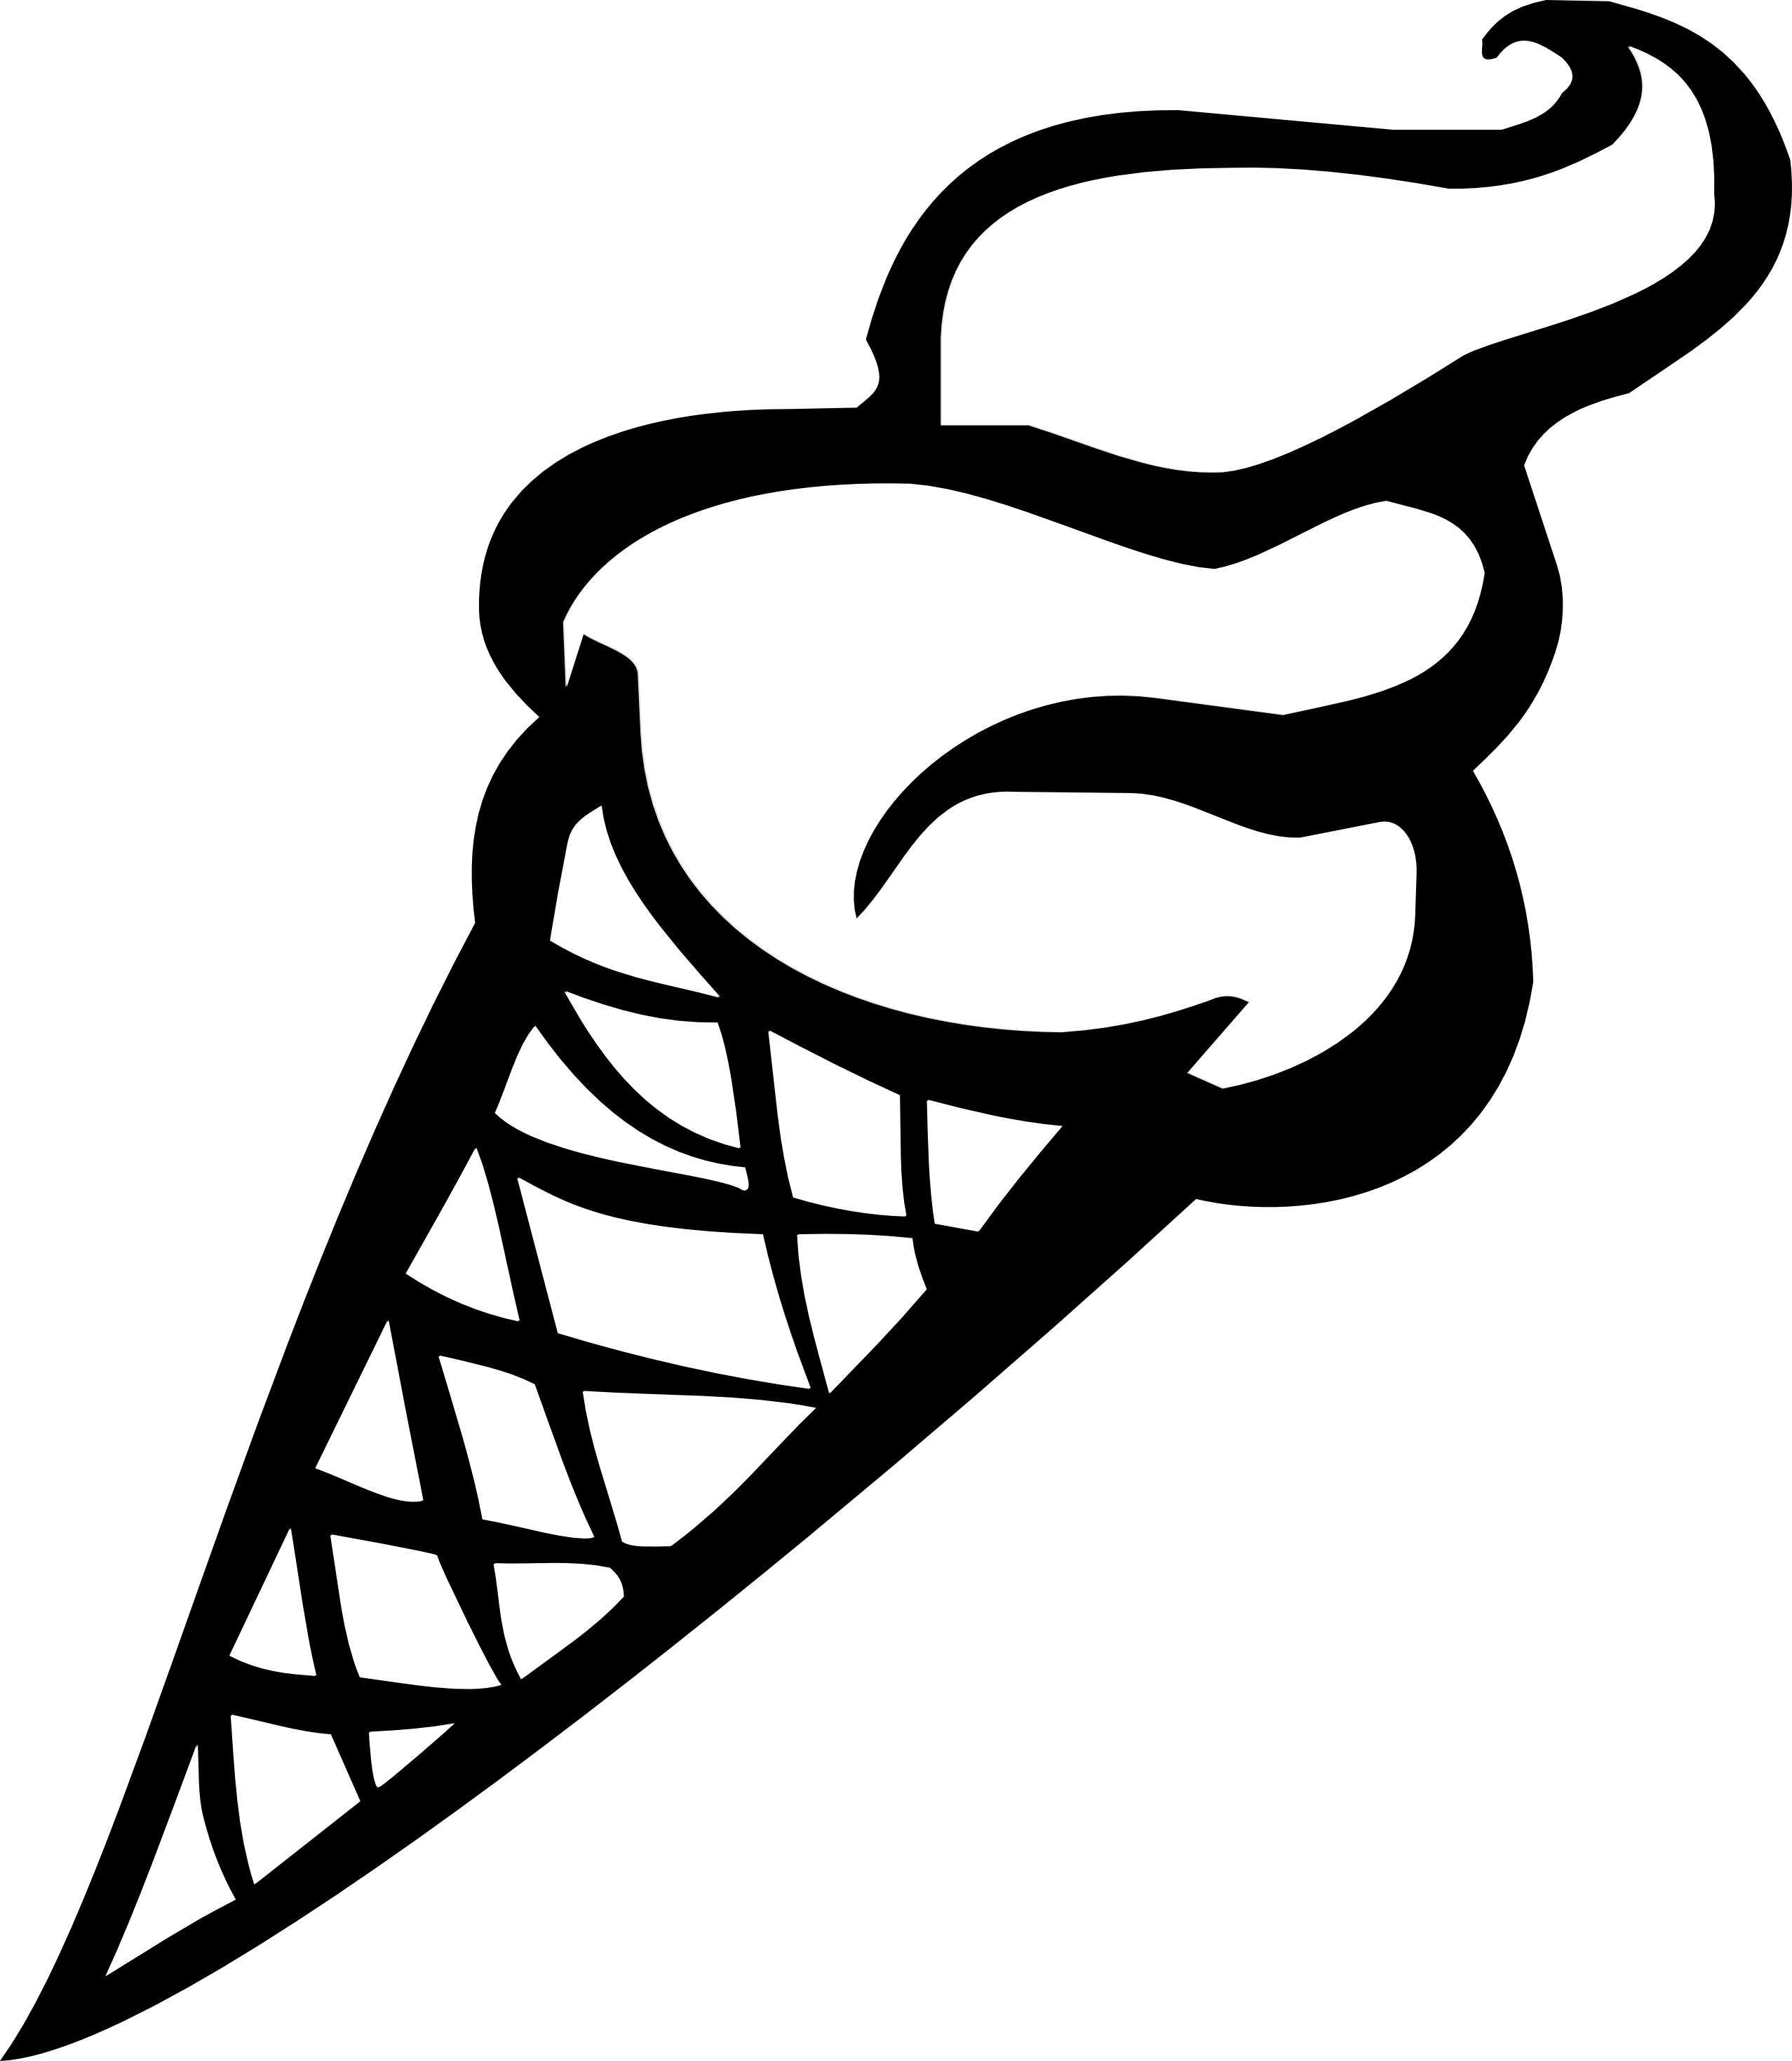 Ice cream sundae clipart black and white clipart